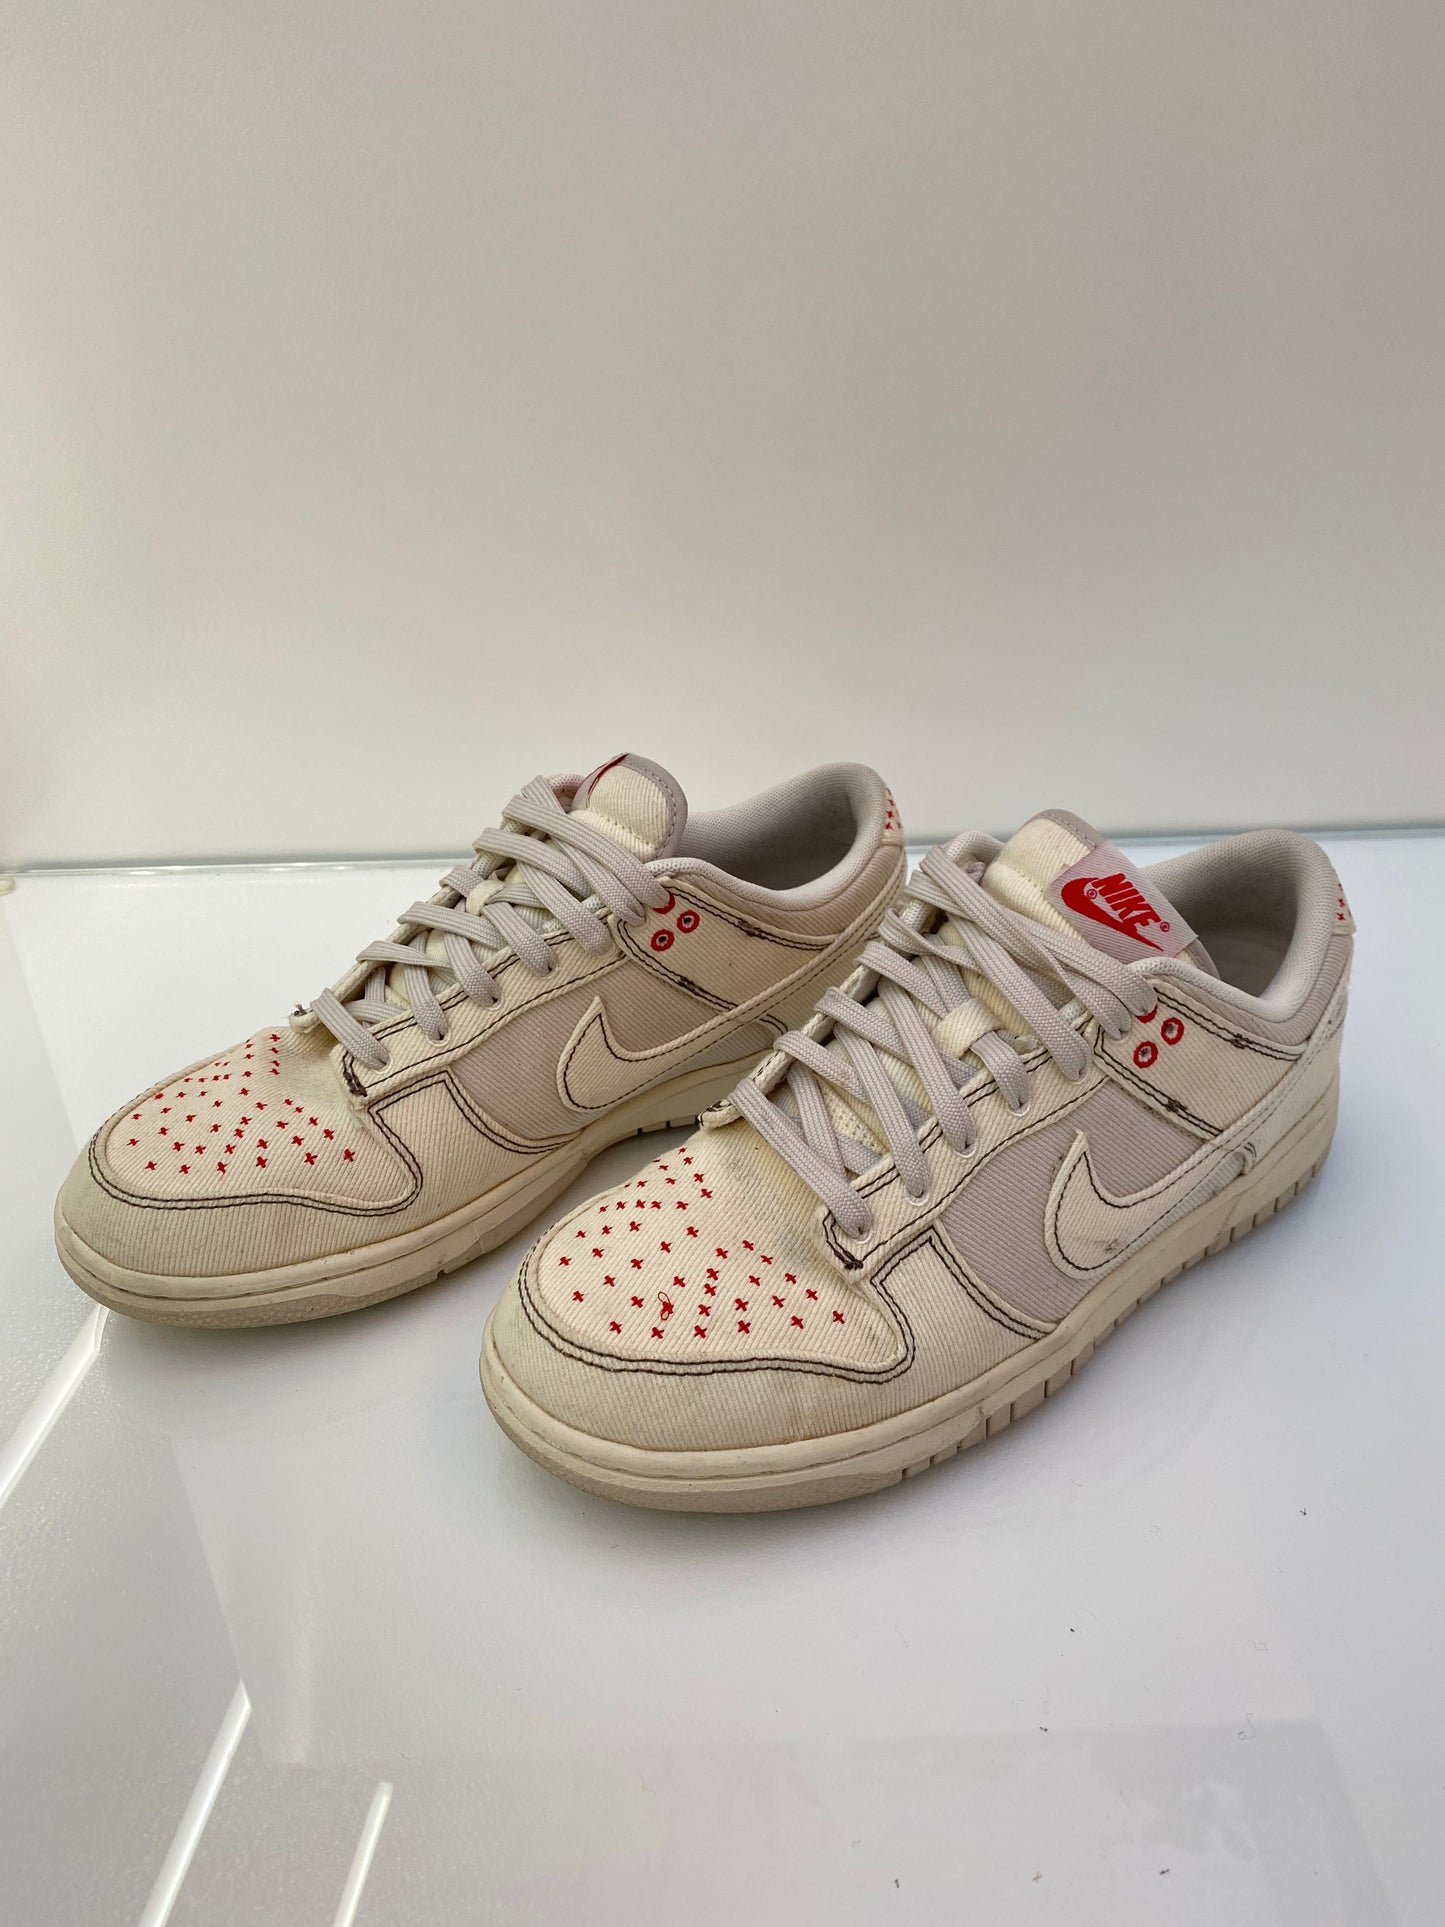 Nike Retro Dunk Sneakers 8.5